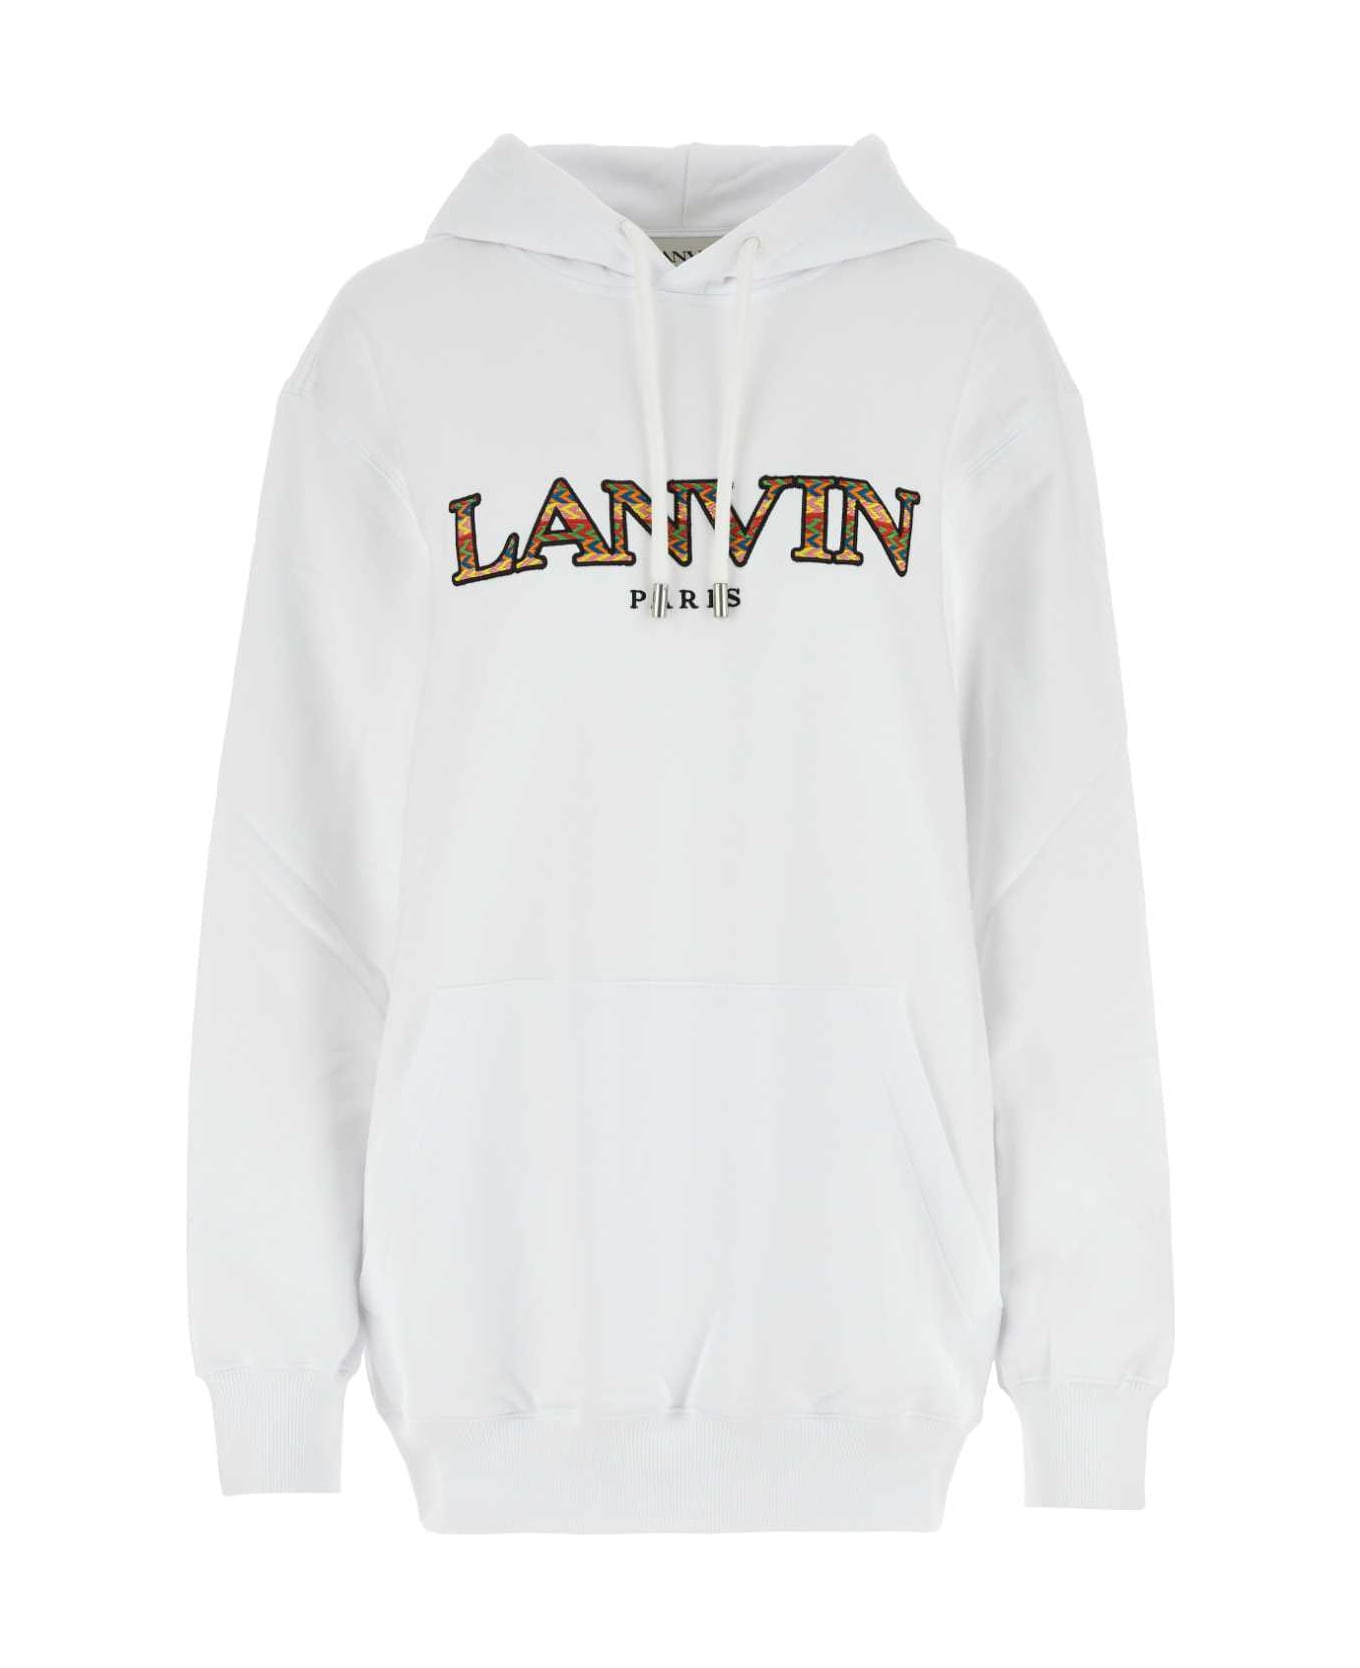 Lanvin White Cotton Sweatshirt - OPTICWHITE フリース